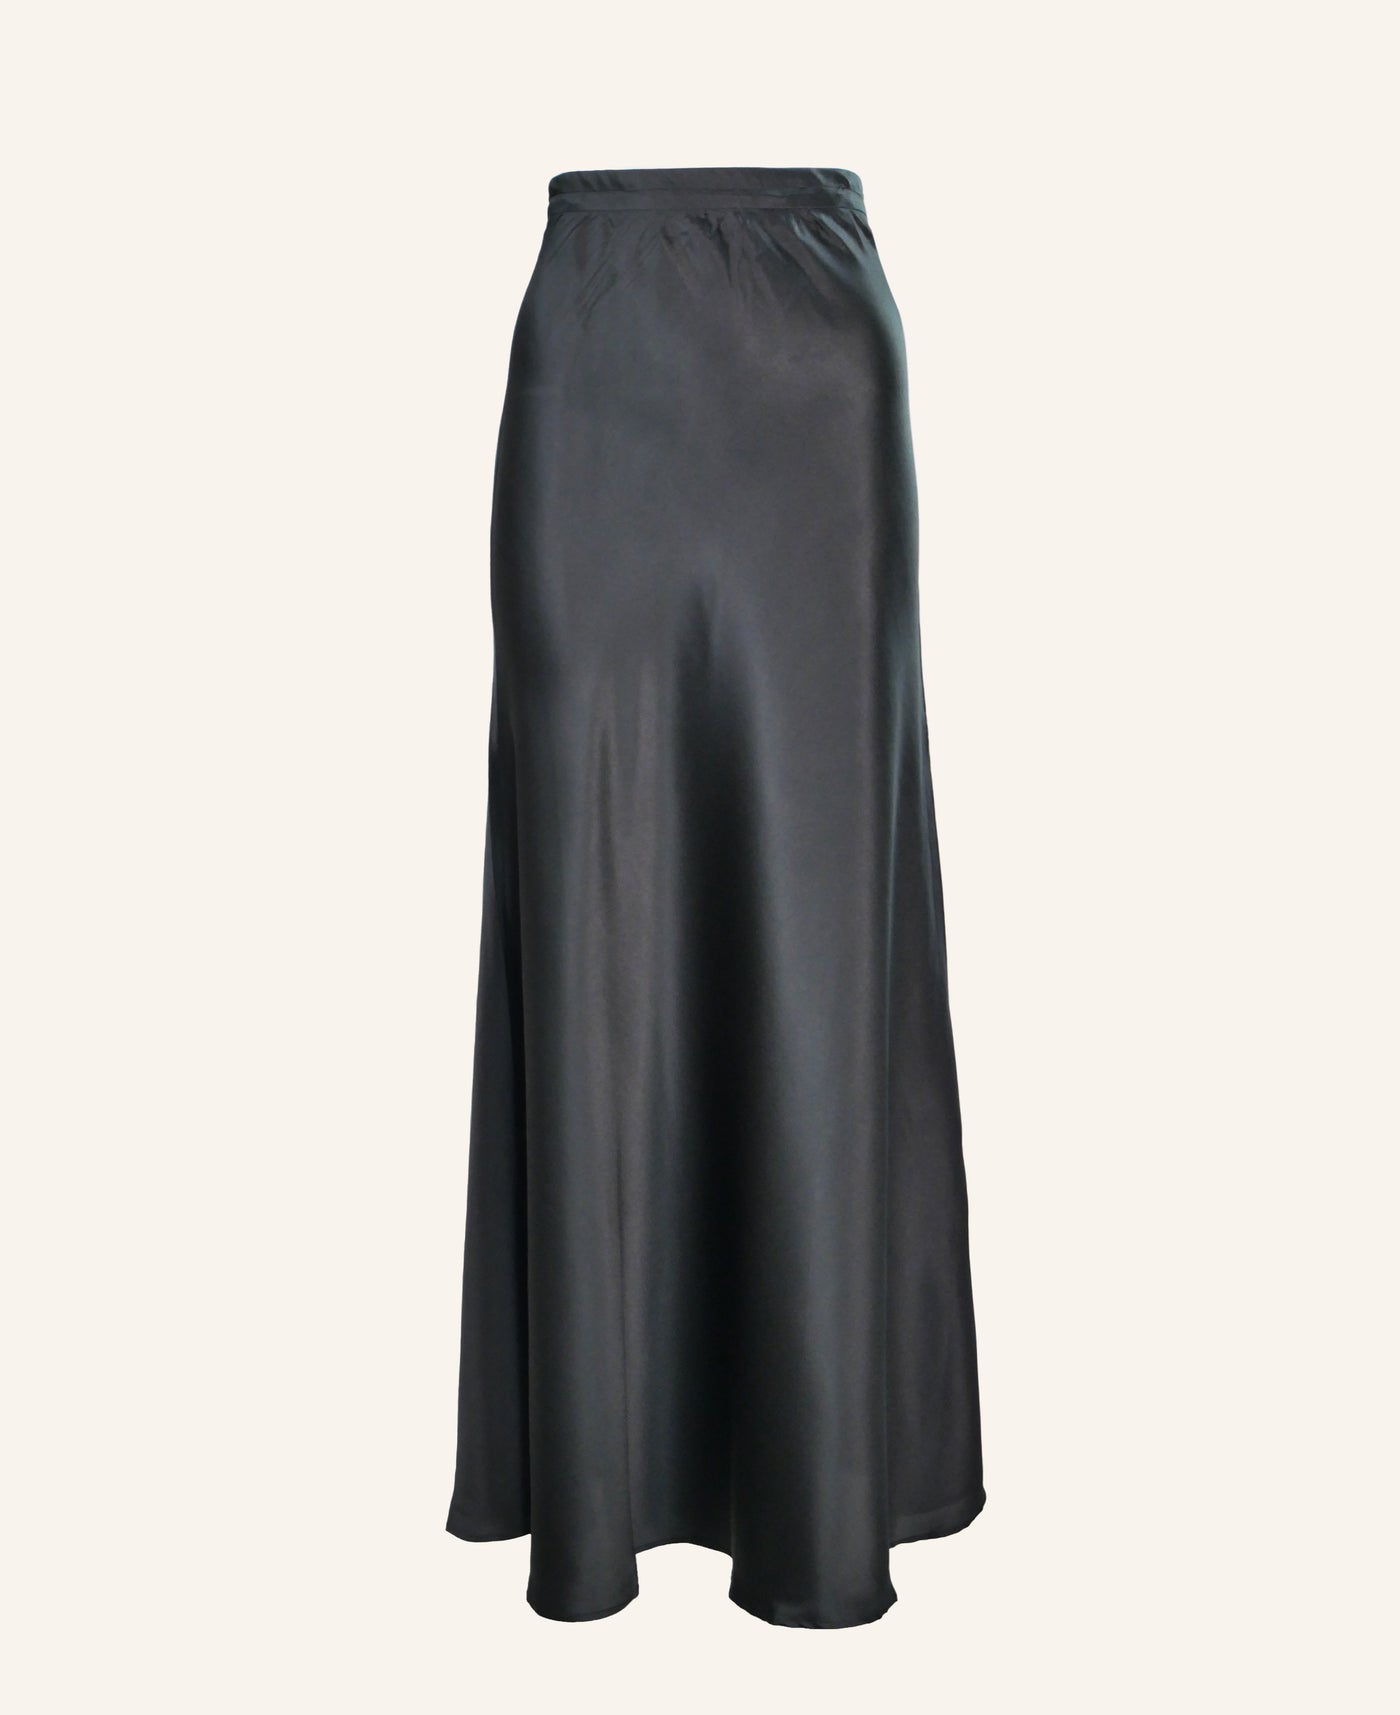 Charlotte Sparre Seidenrock Mermaid Skirt Solid Black